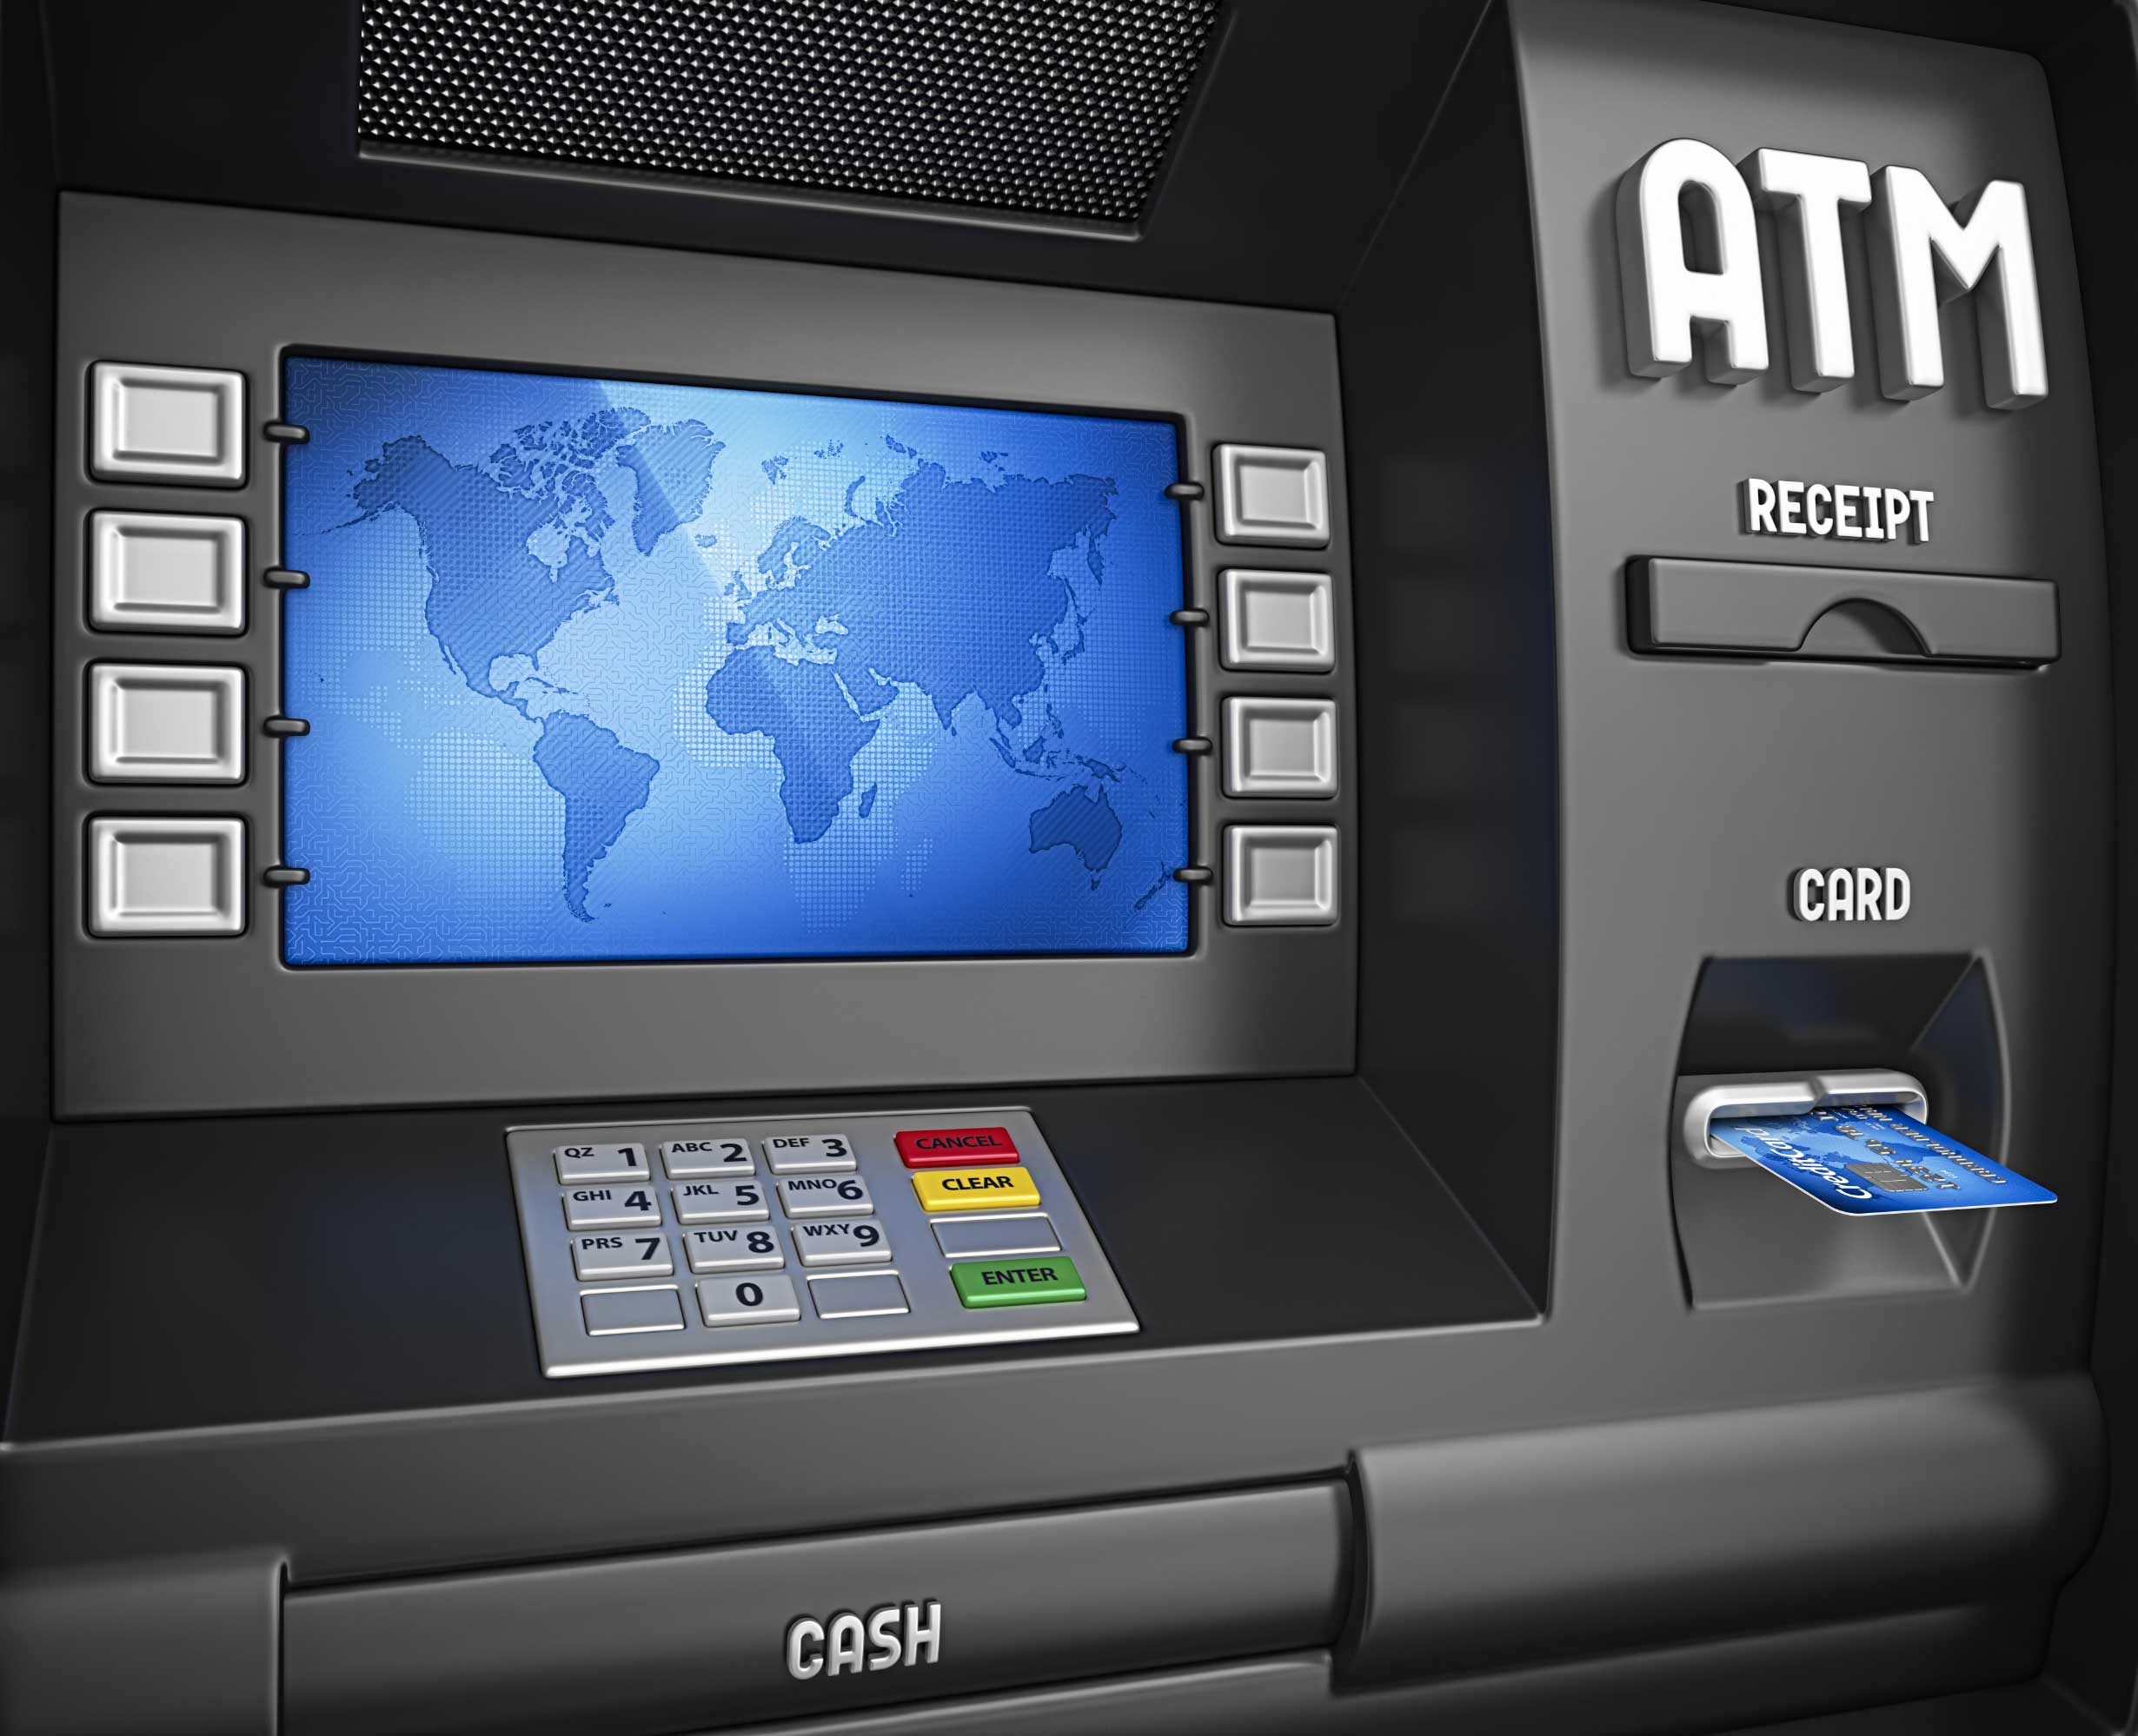 Report: Federal agents seize ATM machines in Ohio - WFMJ.com News